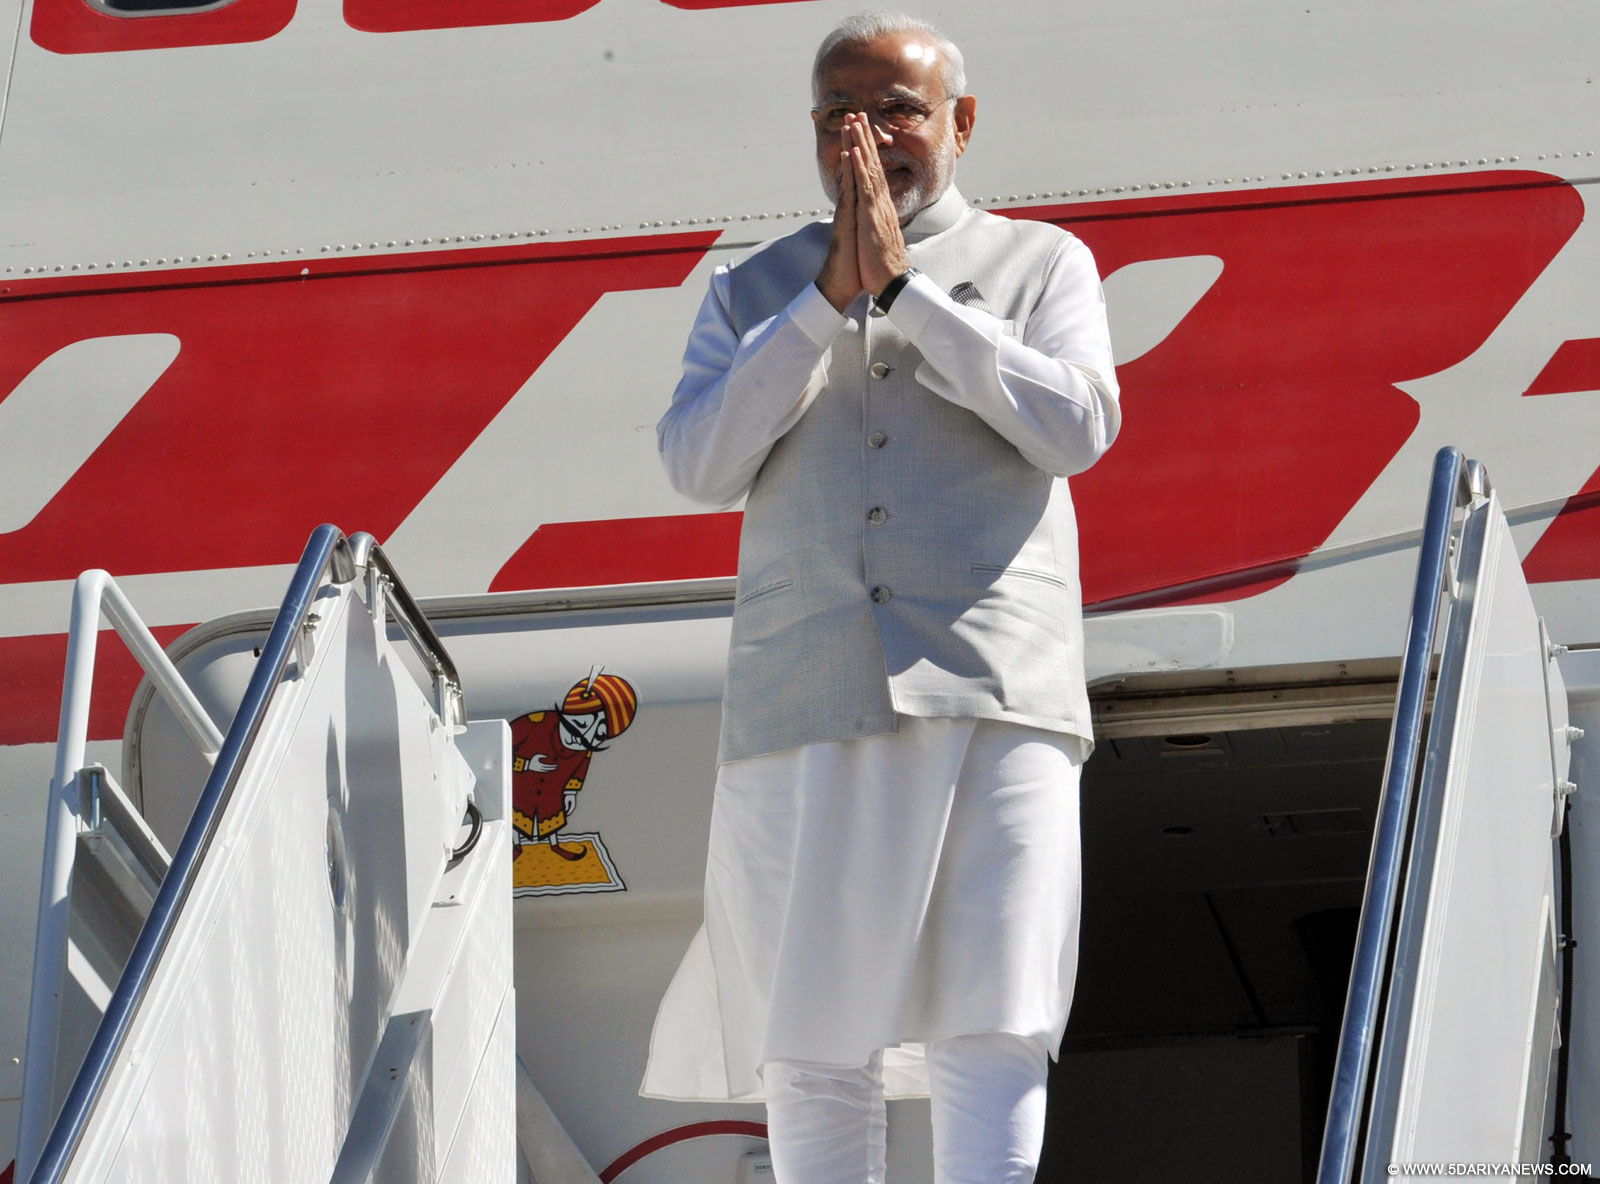 The Prime Minister, Shri Narendra Modi arrives at San Jose International Airport on September 26, 2015.